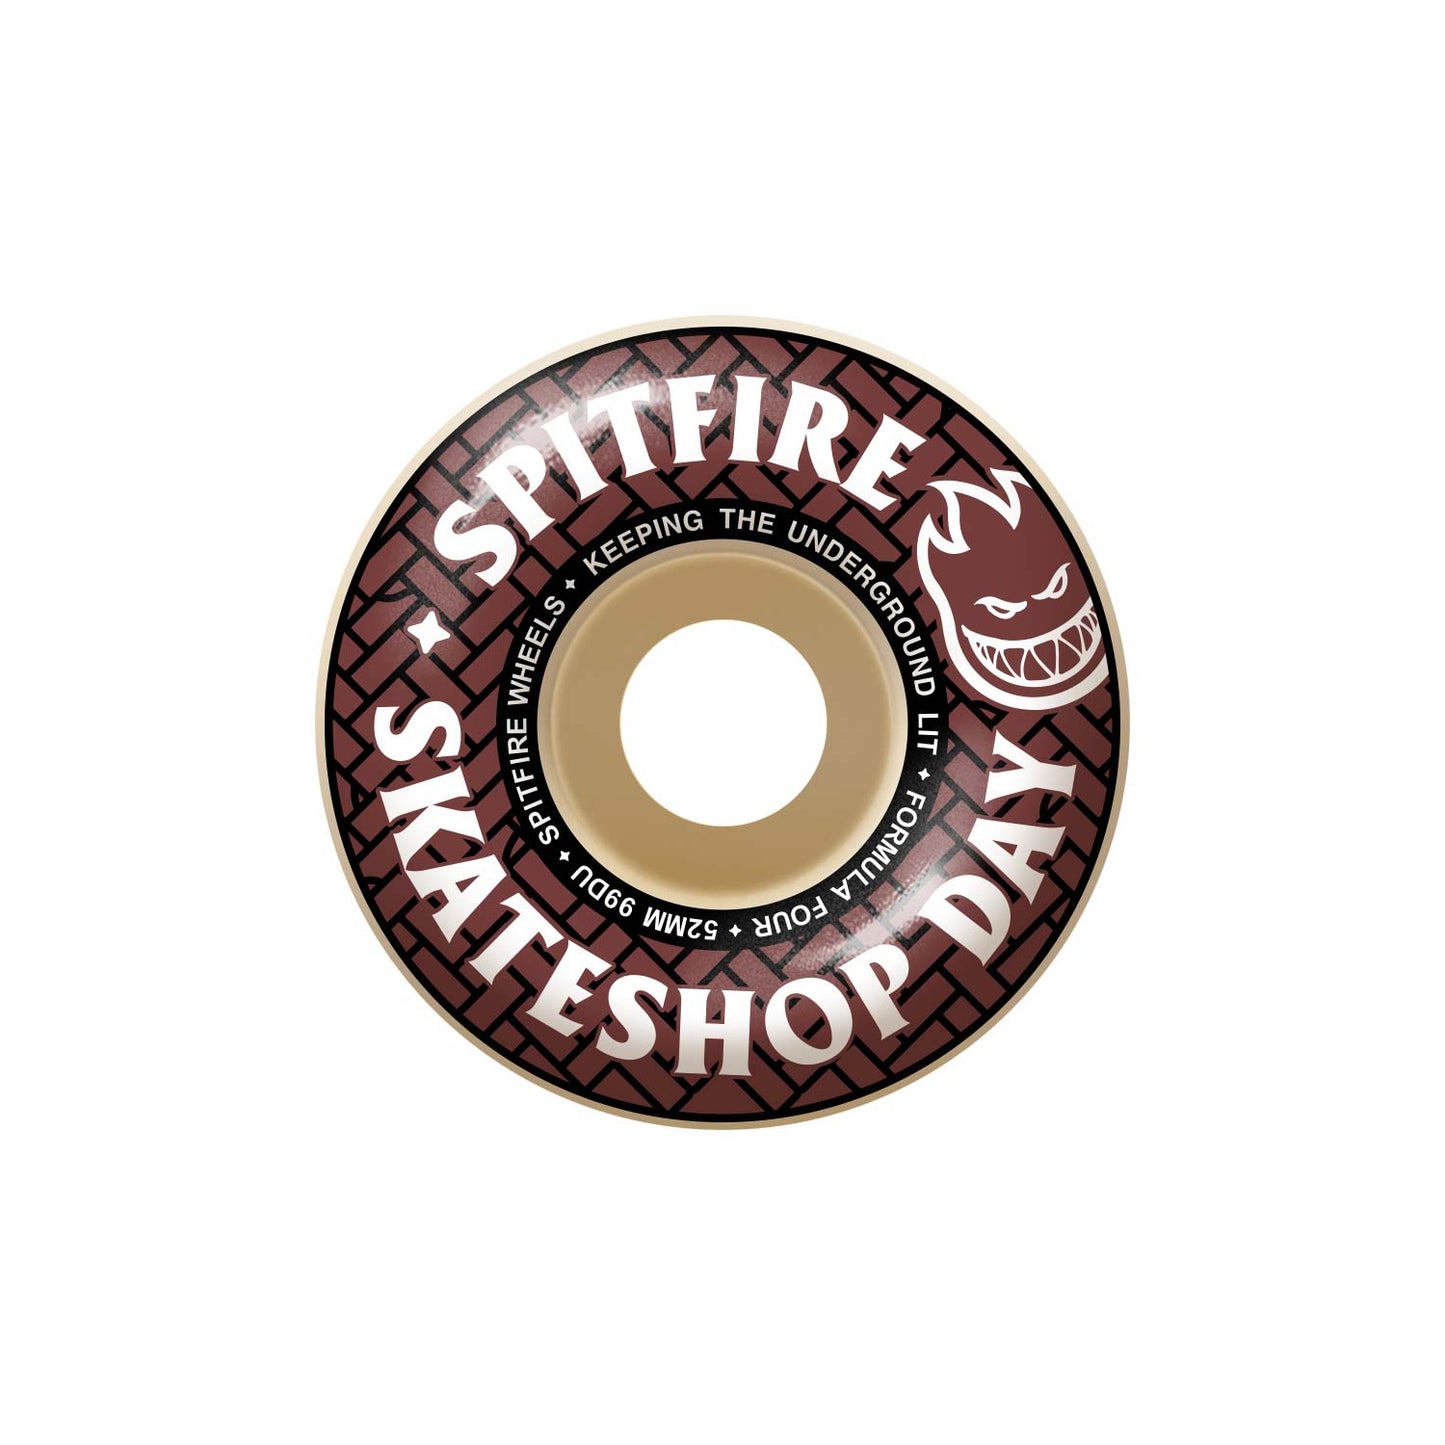 Spitfire Skate Shop Day Formula Four Classic wheel (99A, 52mm) - Tiki Room Skateboards - 1